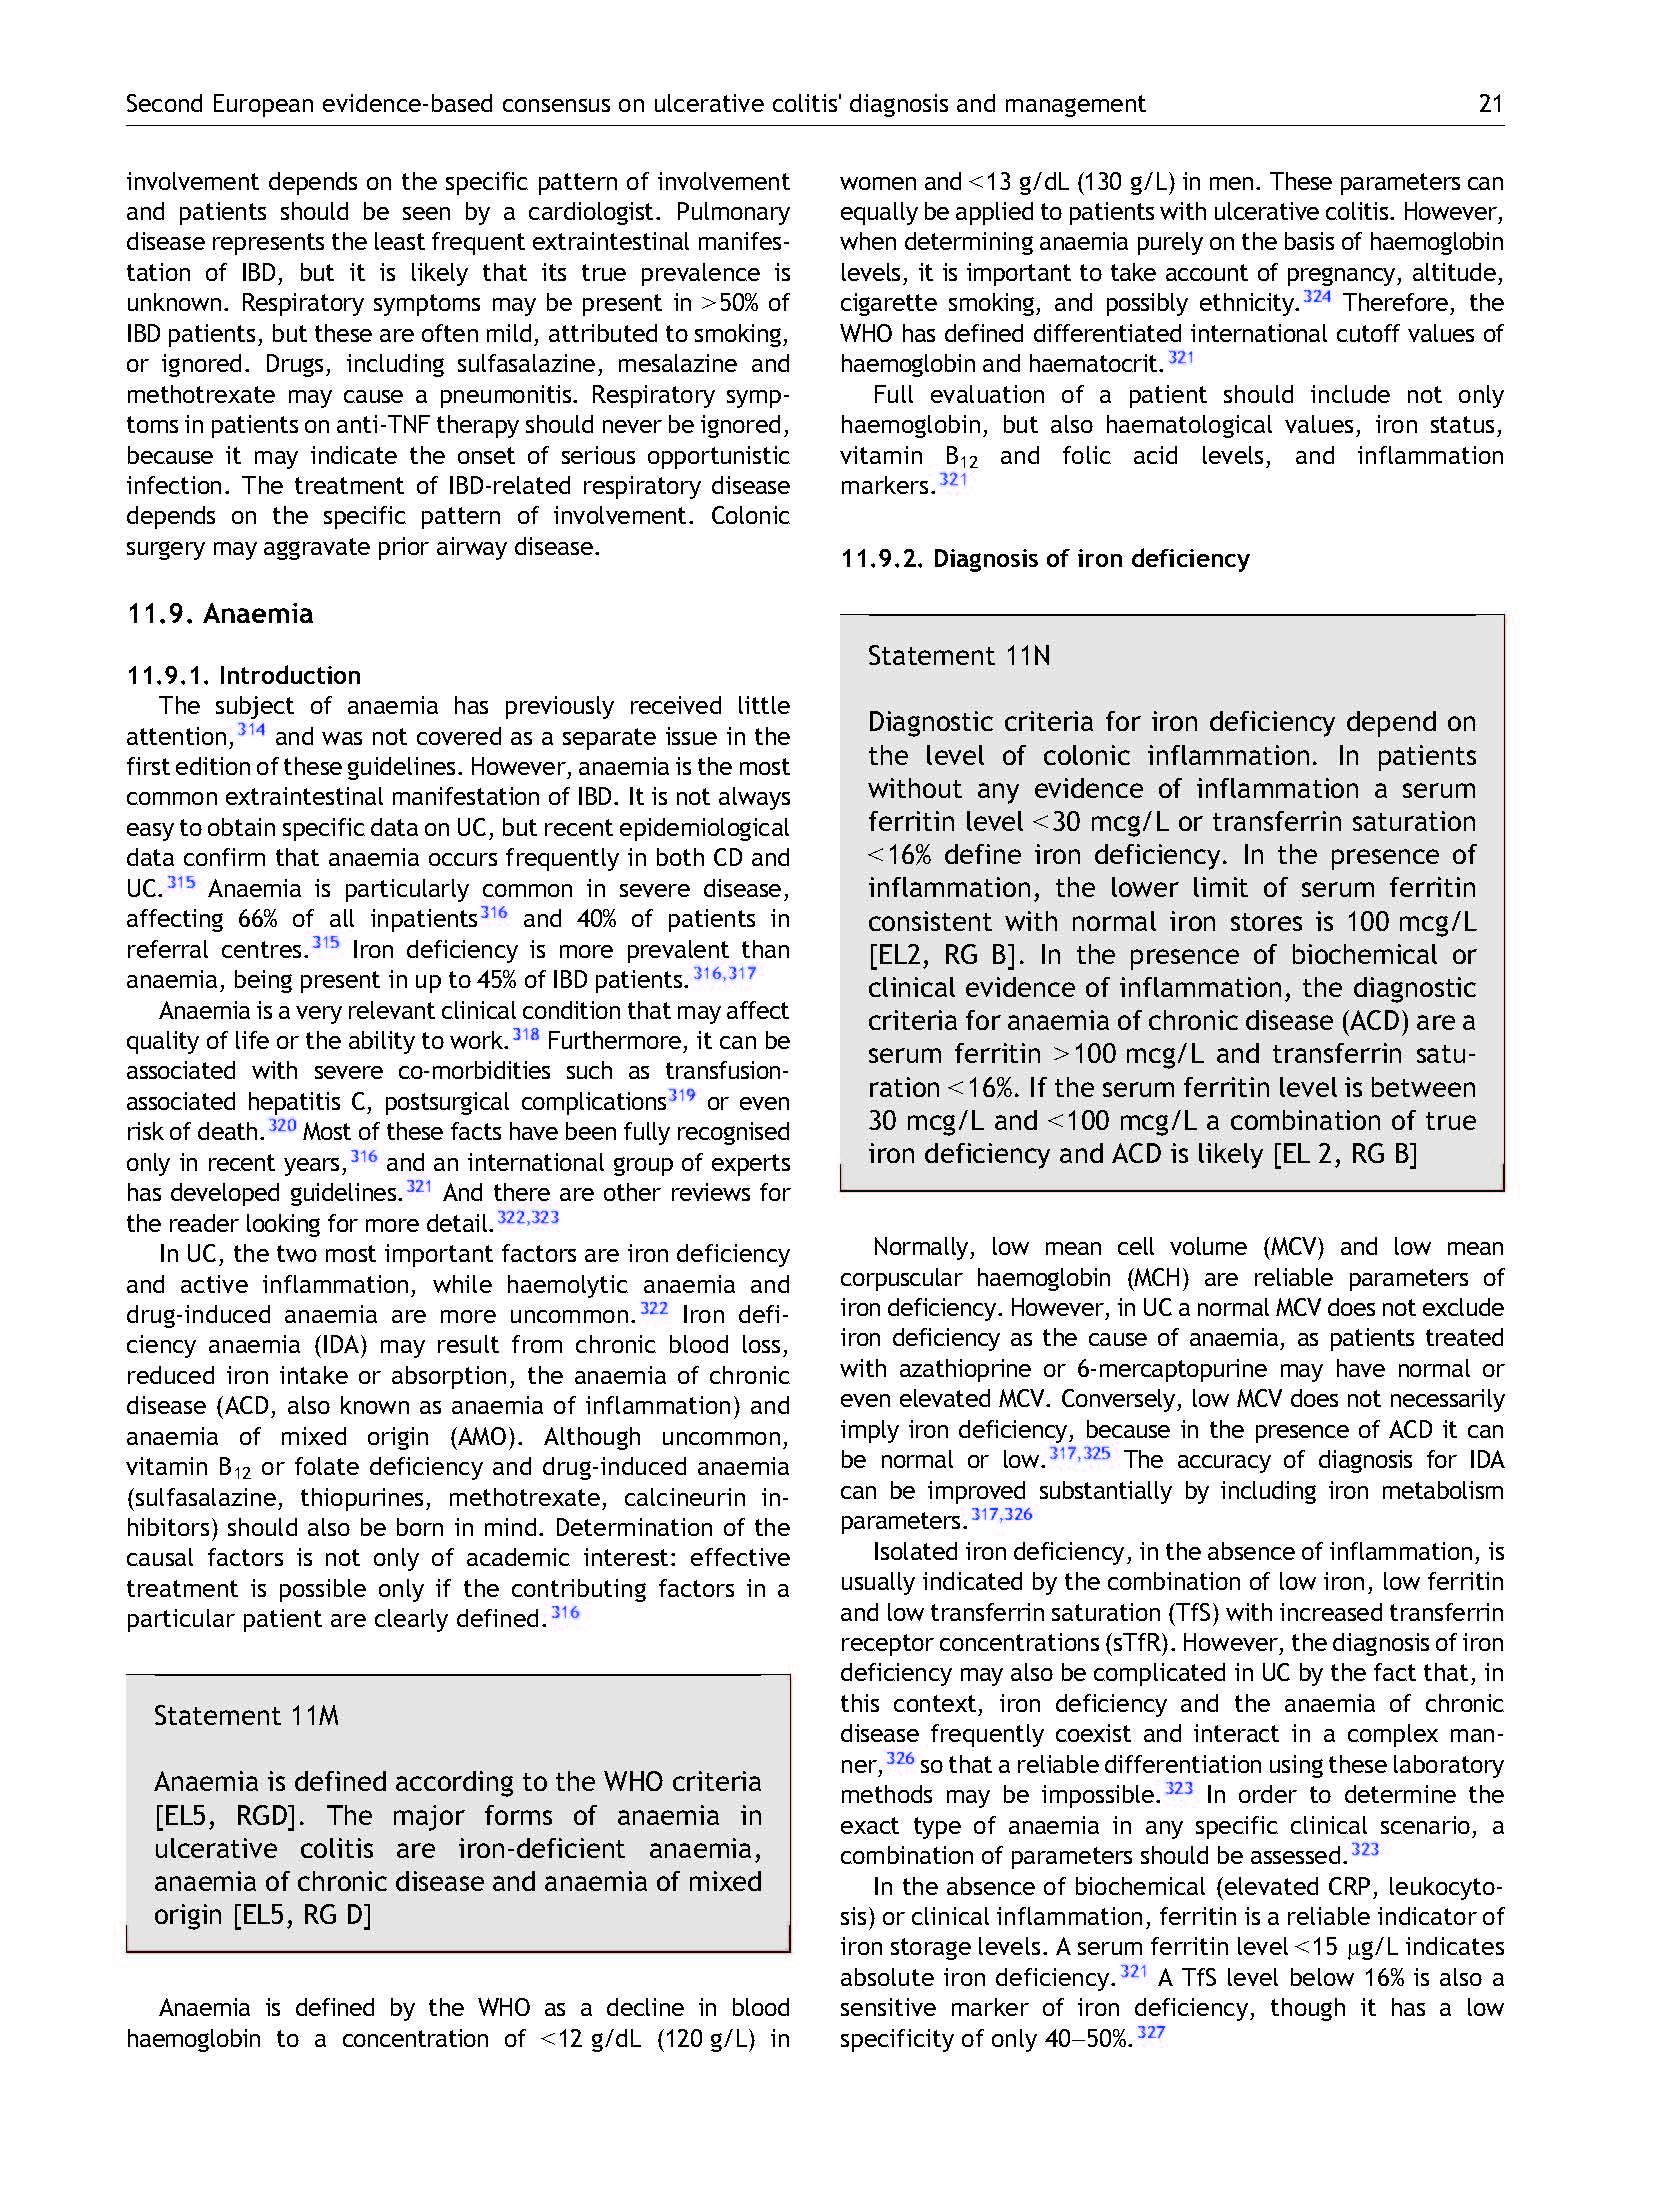 2012-ECCO第二版-欧洲询证共识：溃疡性结肠炎的诊断和处理—特殊情况_页面_21.jpg